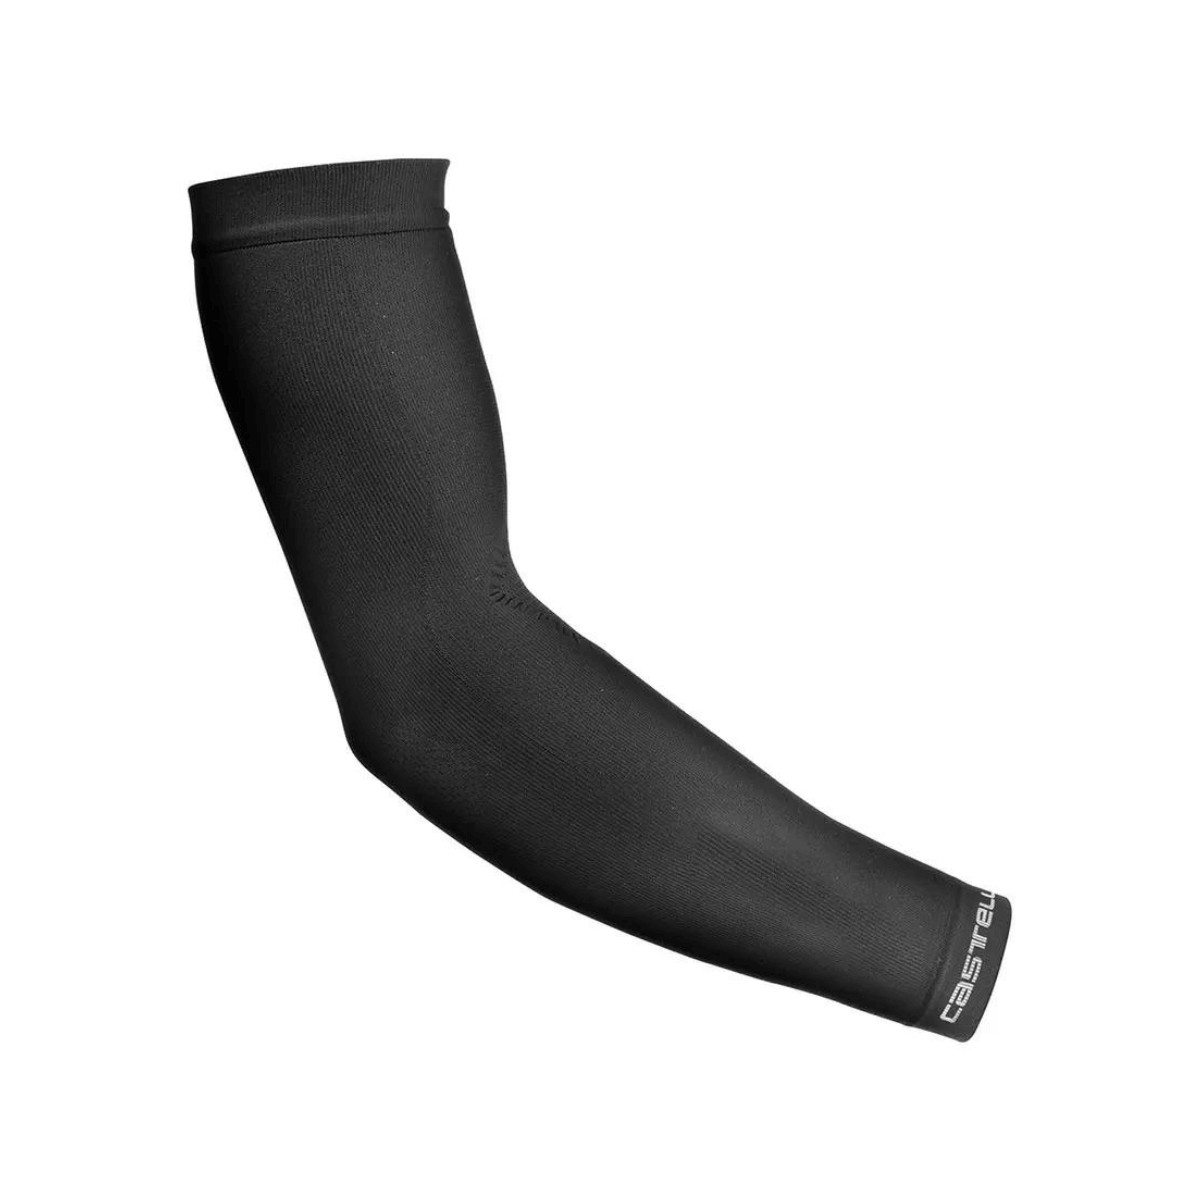 Castelli Pro Seamless 2 Sleeves Black, Size L/XL